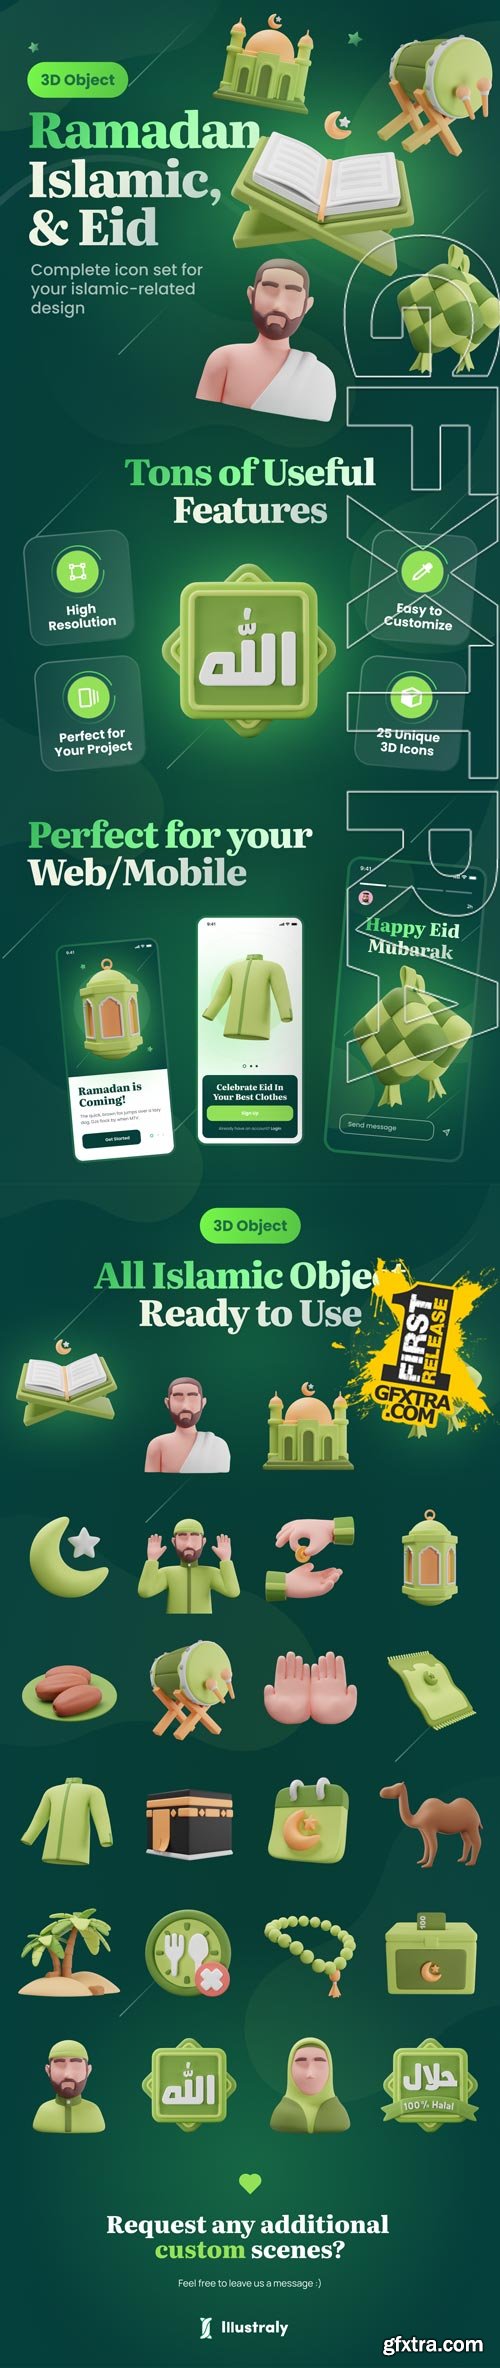 Islamy - Ramadan, Islamic, and Eid 3D Icon Set Model